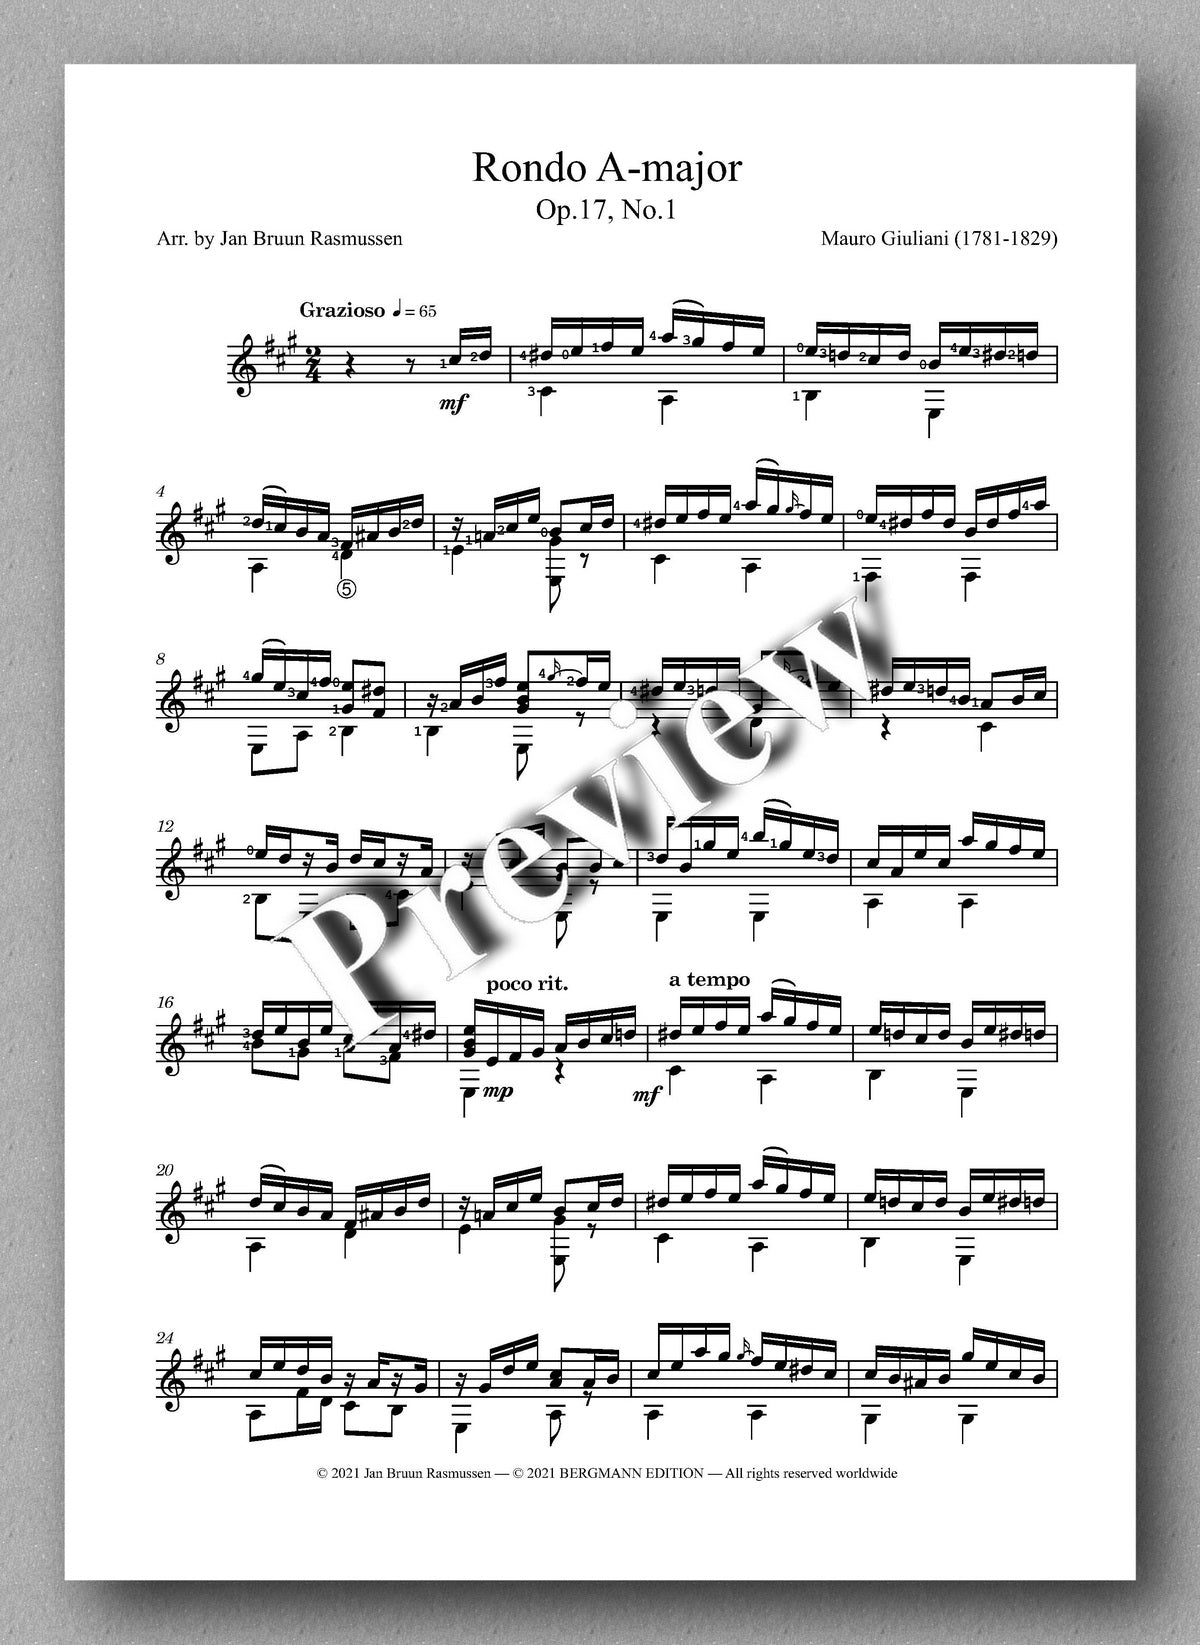 Rondo in A-major, Op.17, No.1 by  Mauro Giuliani - music score